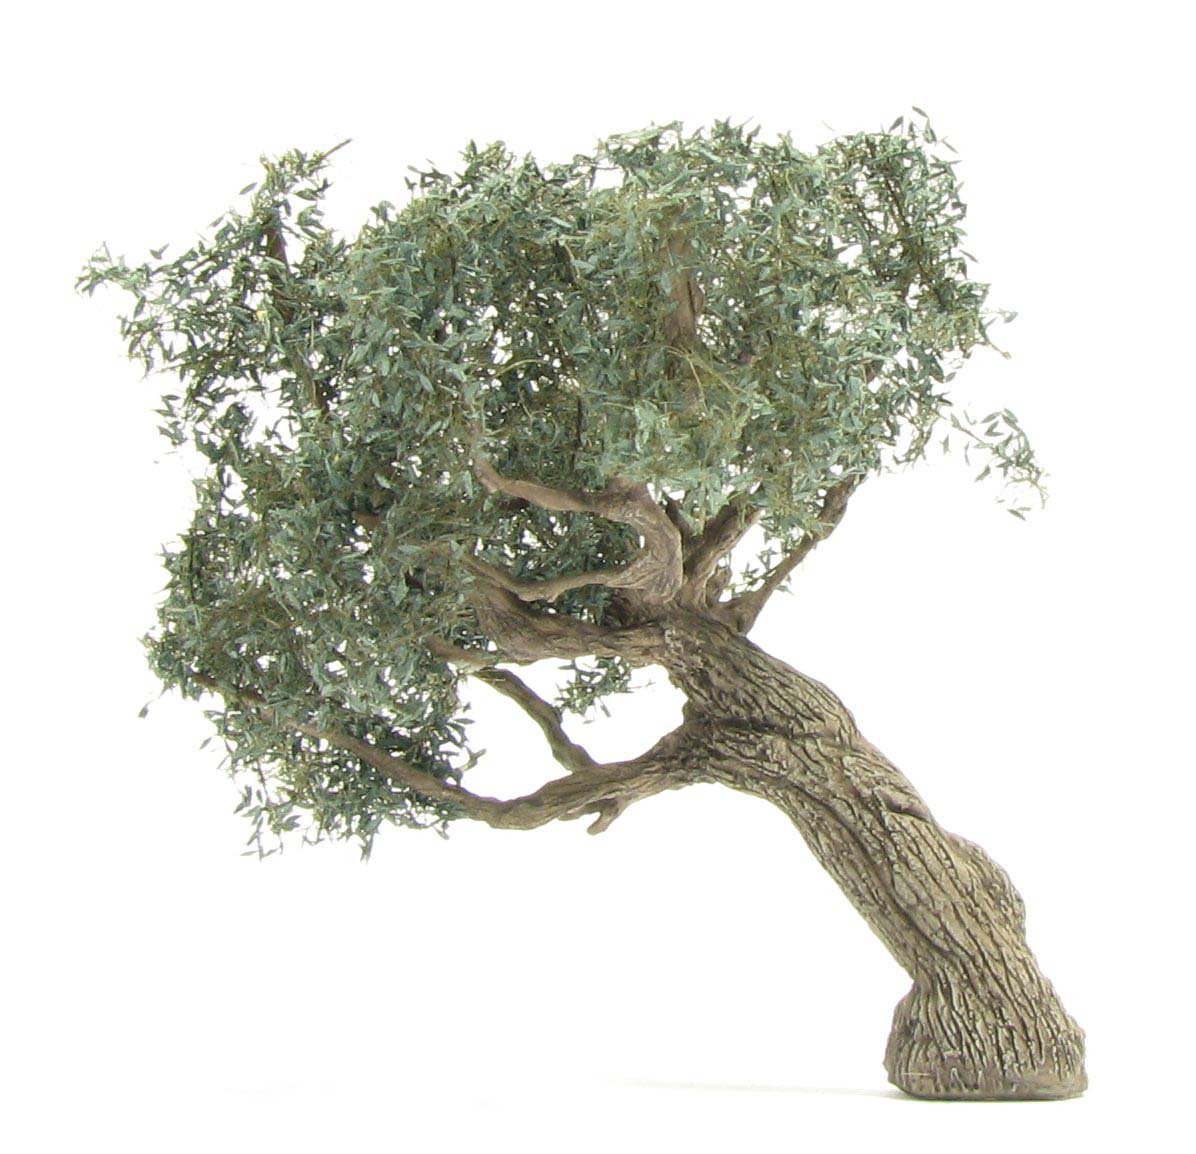 wargamign terrain, olive tree, scenic base, tutorial, realistic bark